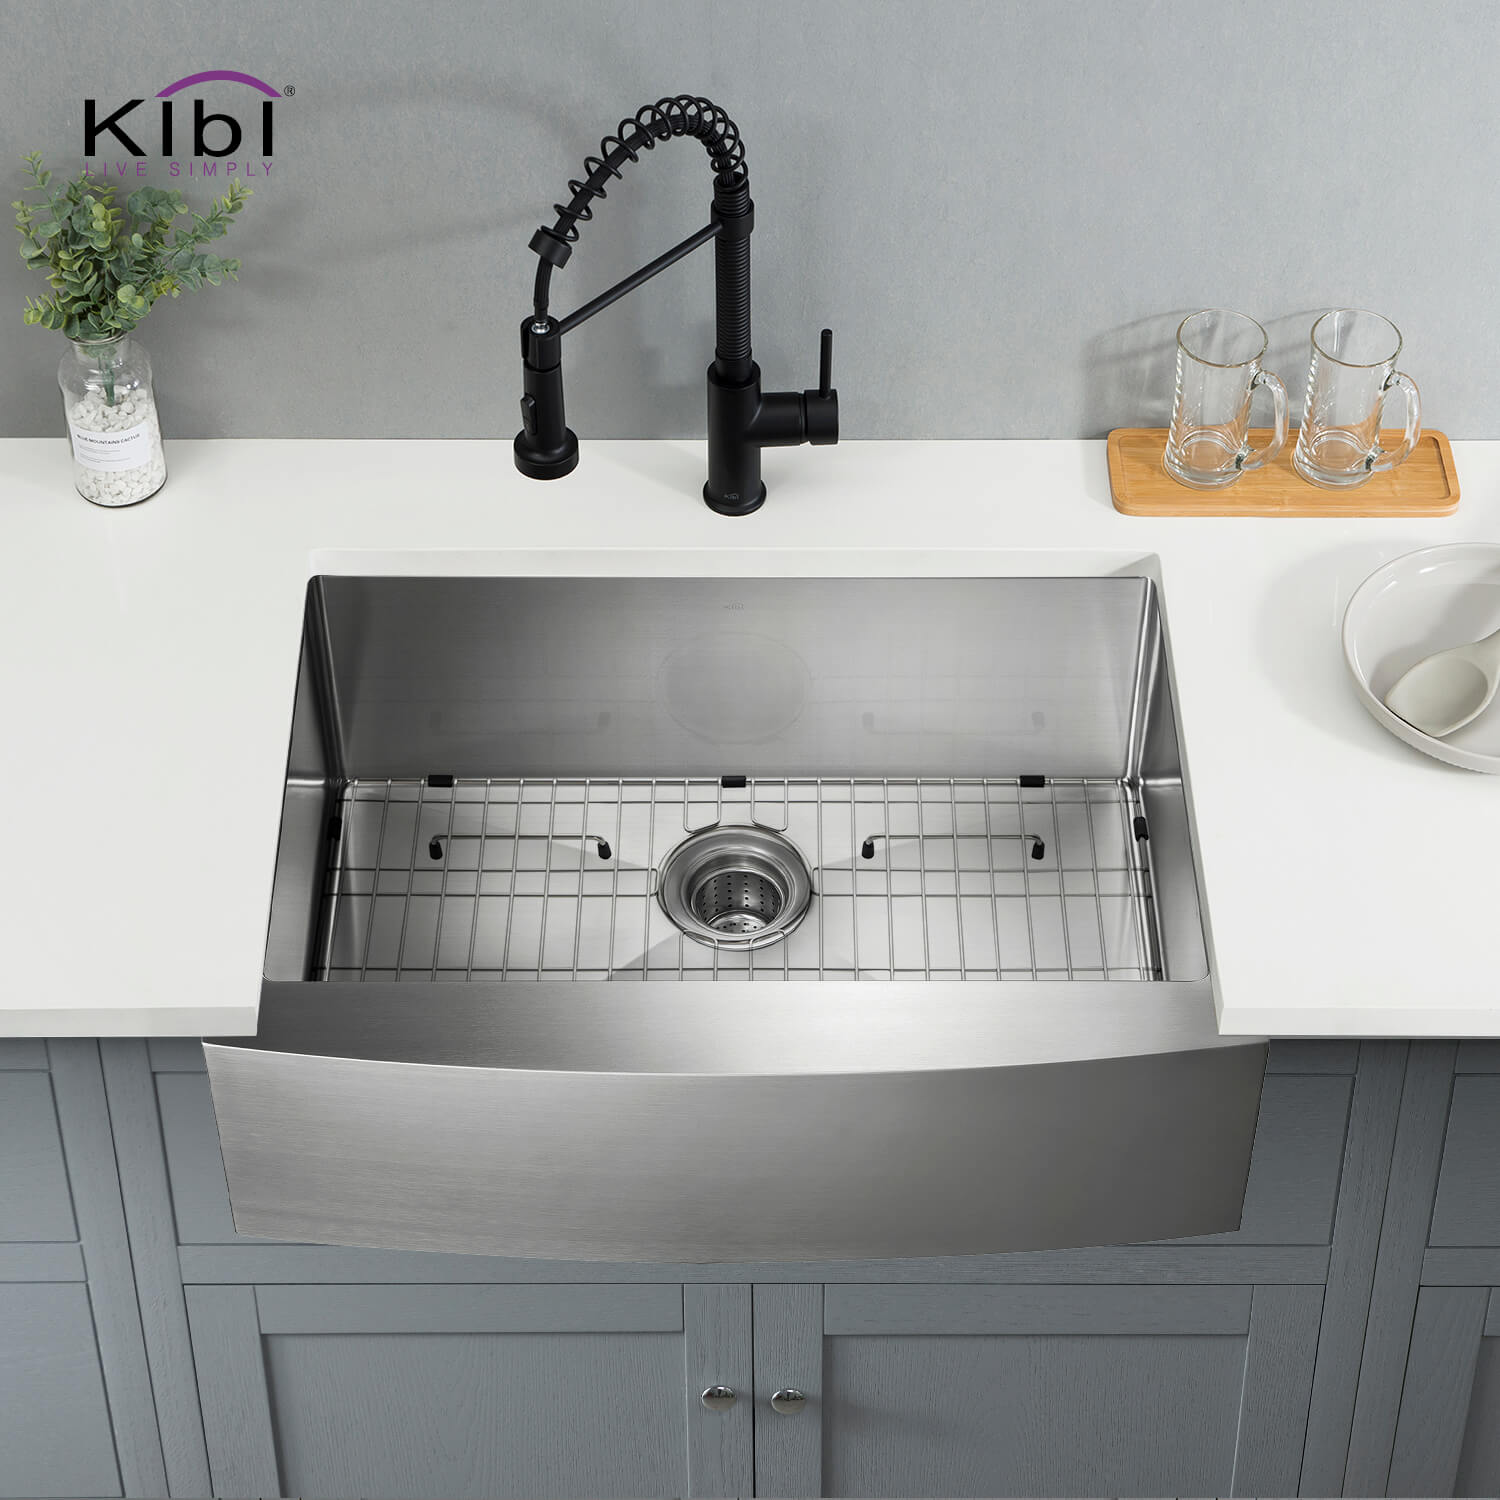 Kibi 30" x 22" x 10" Handcrafted Single Bowl Farmhouse Apron Kitchen Sink